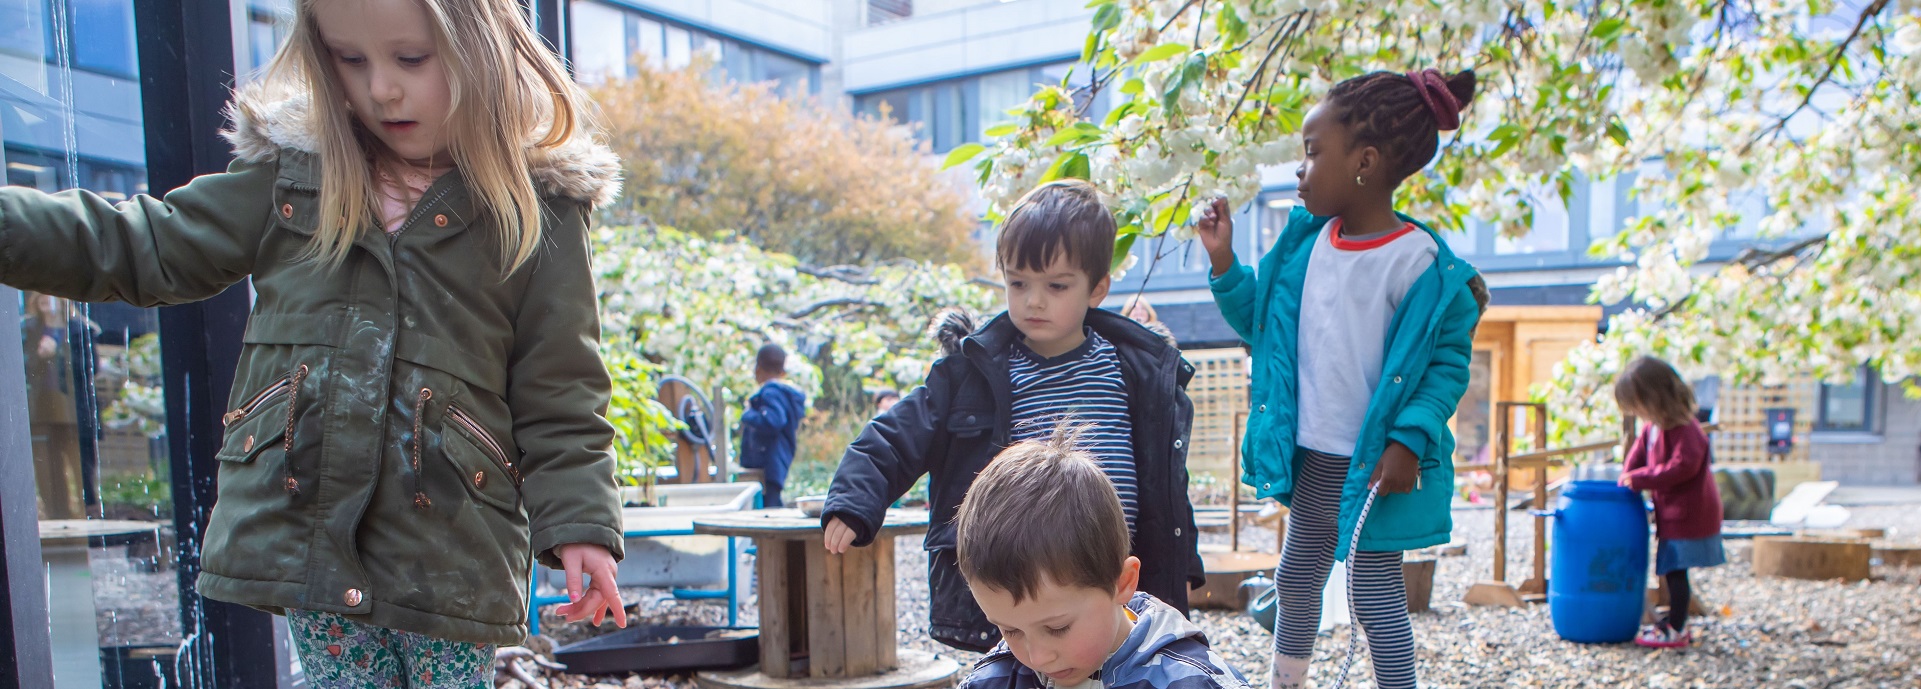 Children in Psychology Kindergarten outside garden